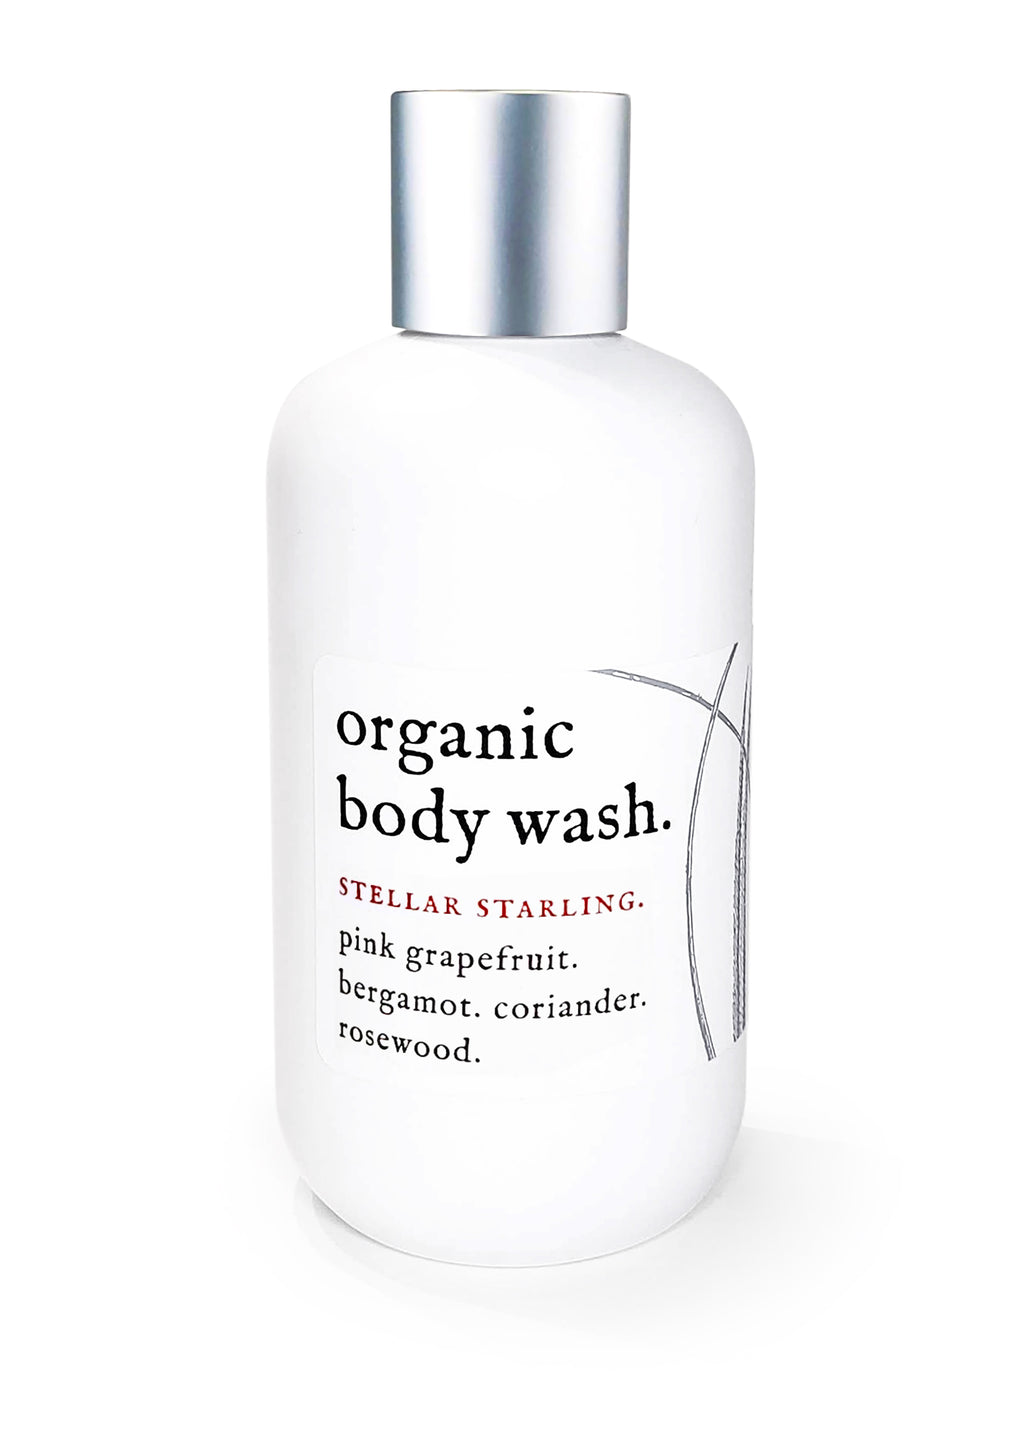 stellar starling ~ organic body wash.